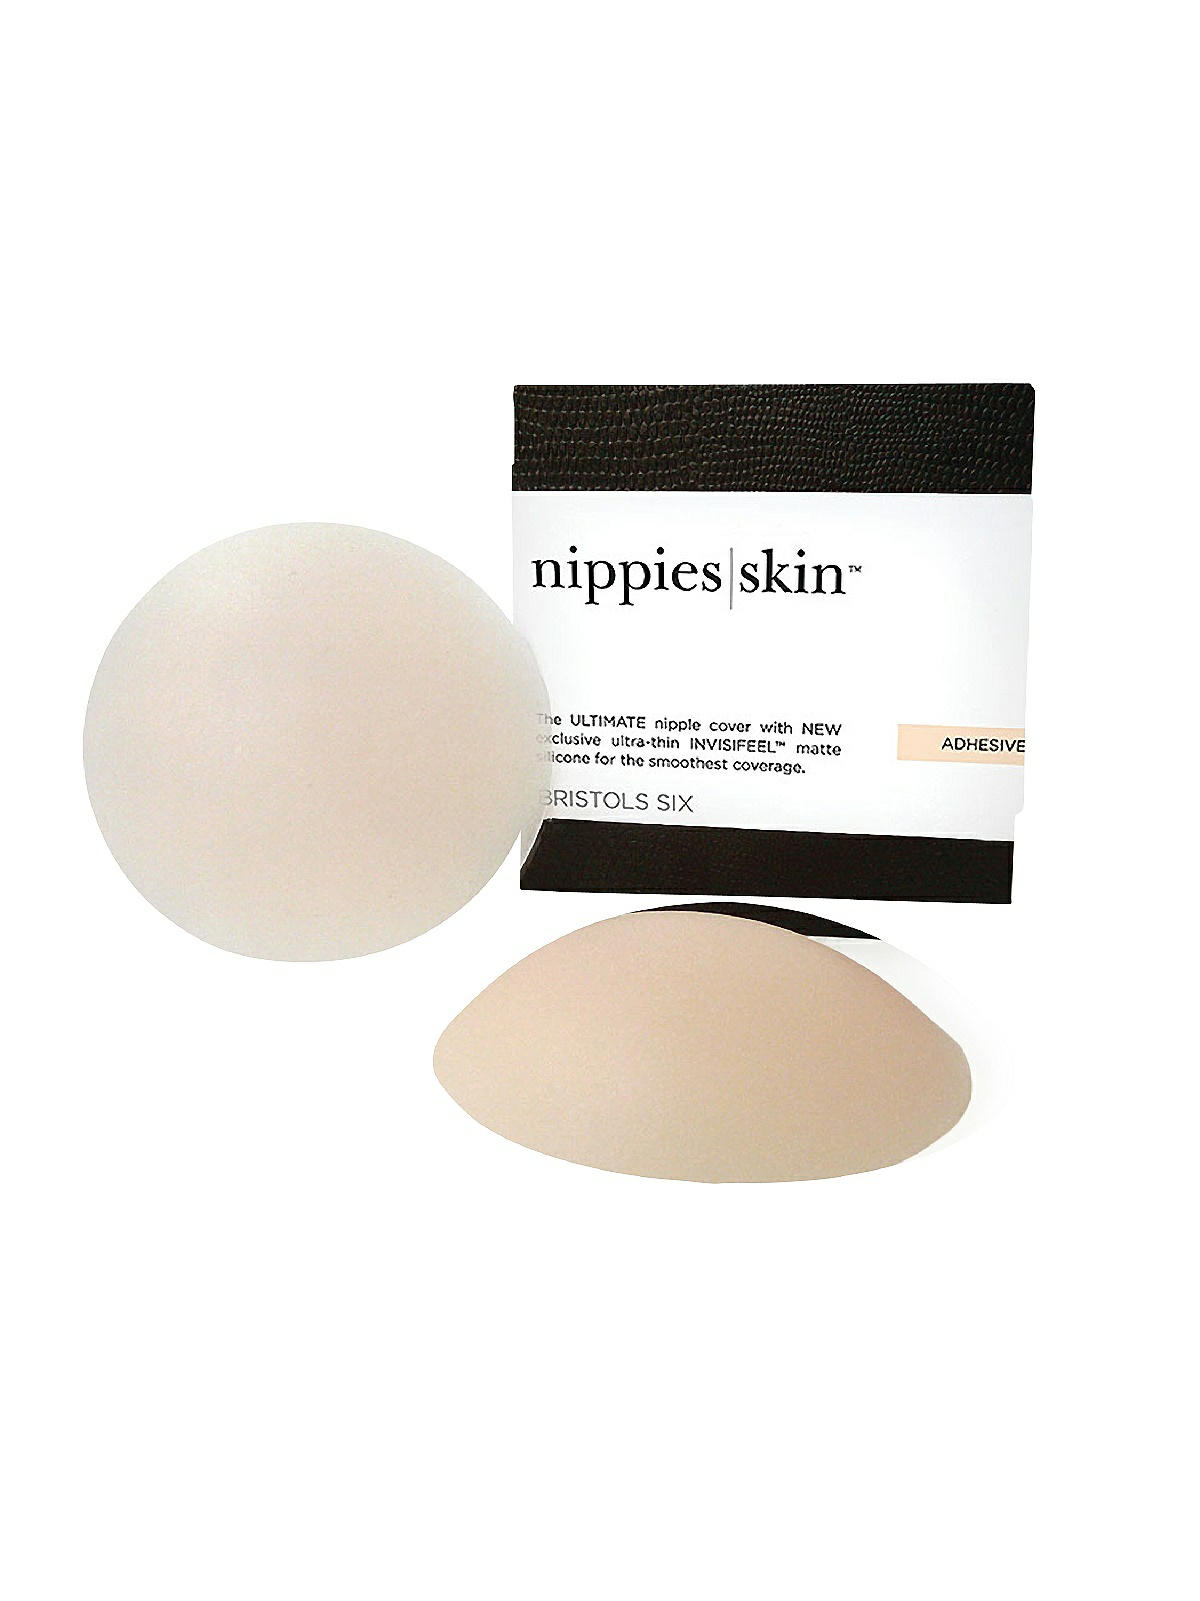 Bristol 6 Adhesive Nippies Skin Covers Light S1-Light - Free